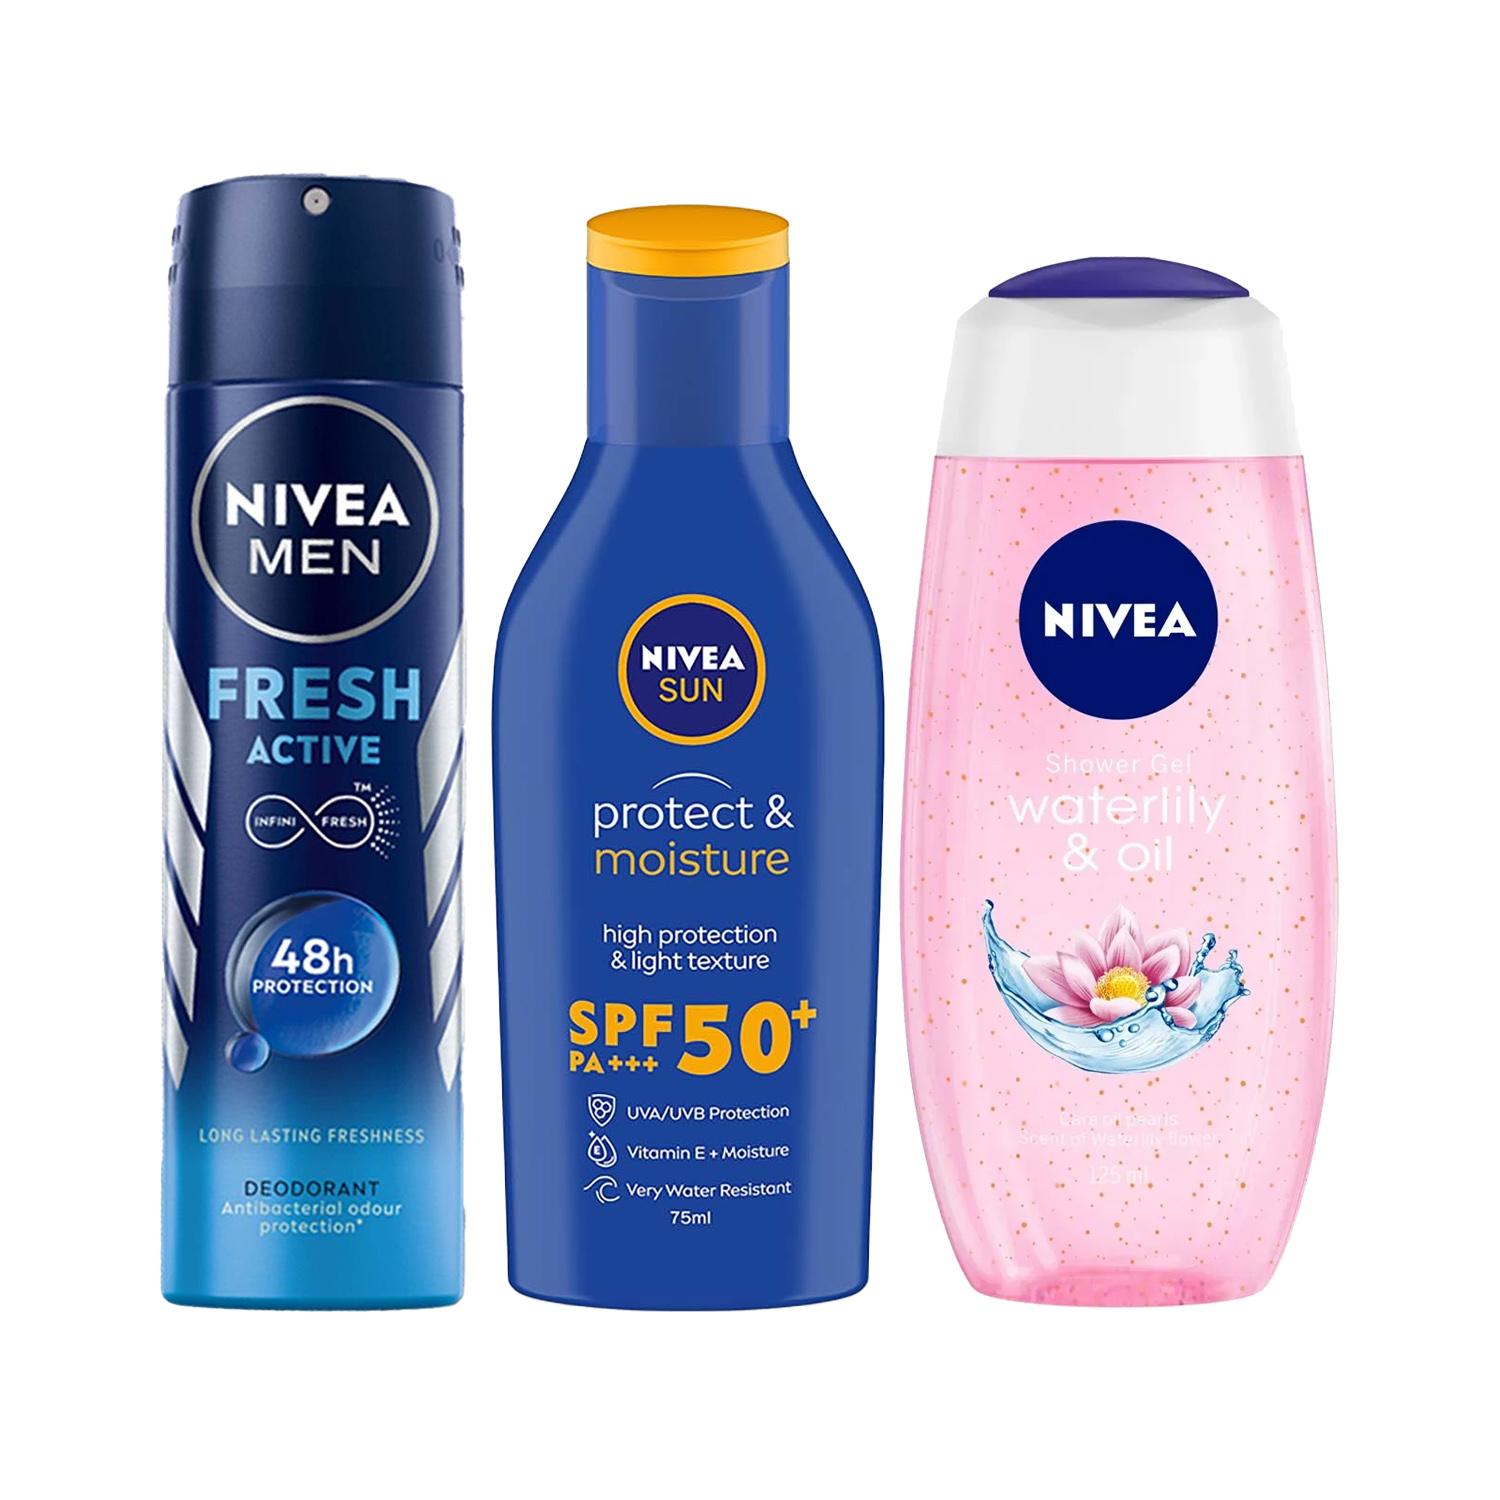 Nivea | Nivea Water Lily & Oil Body Wash and Fresh Active Deodorant, Sun Lotion Summer Essential Combo